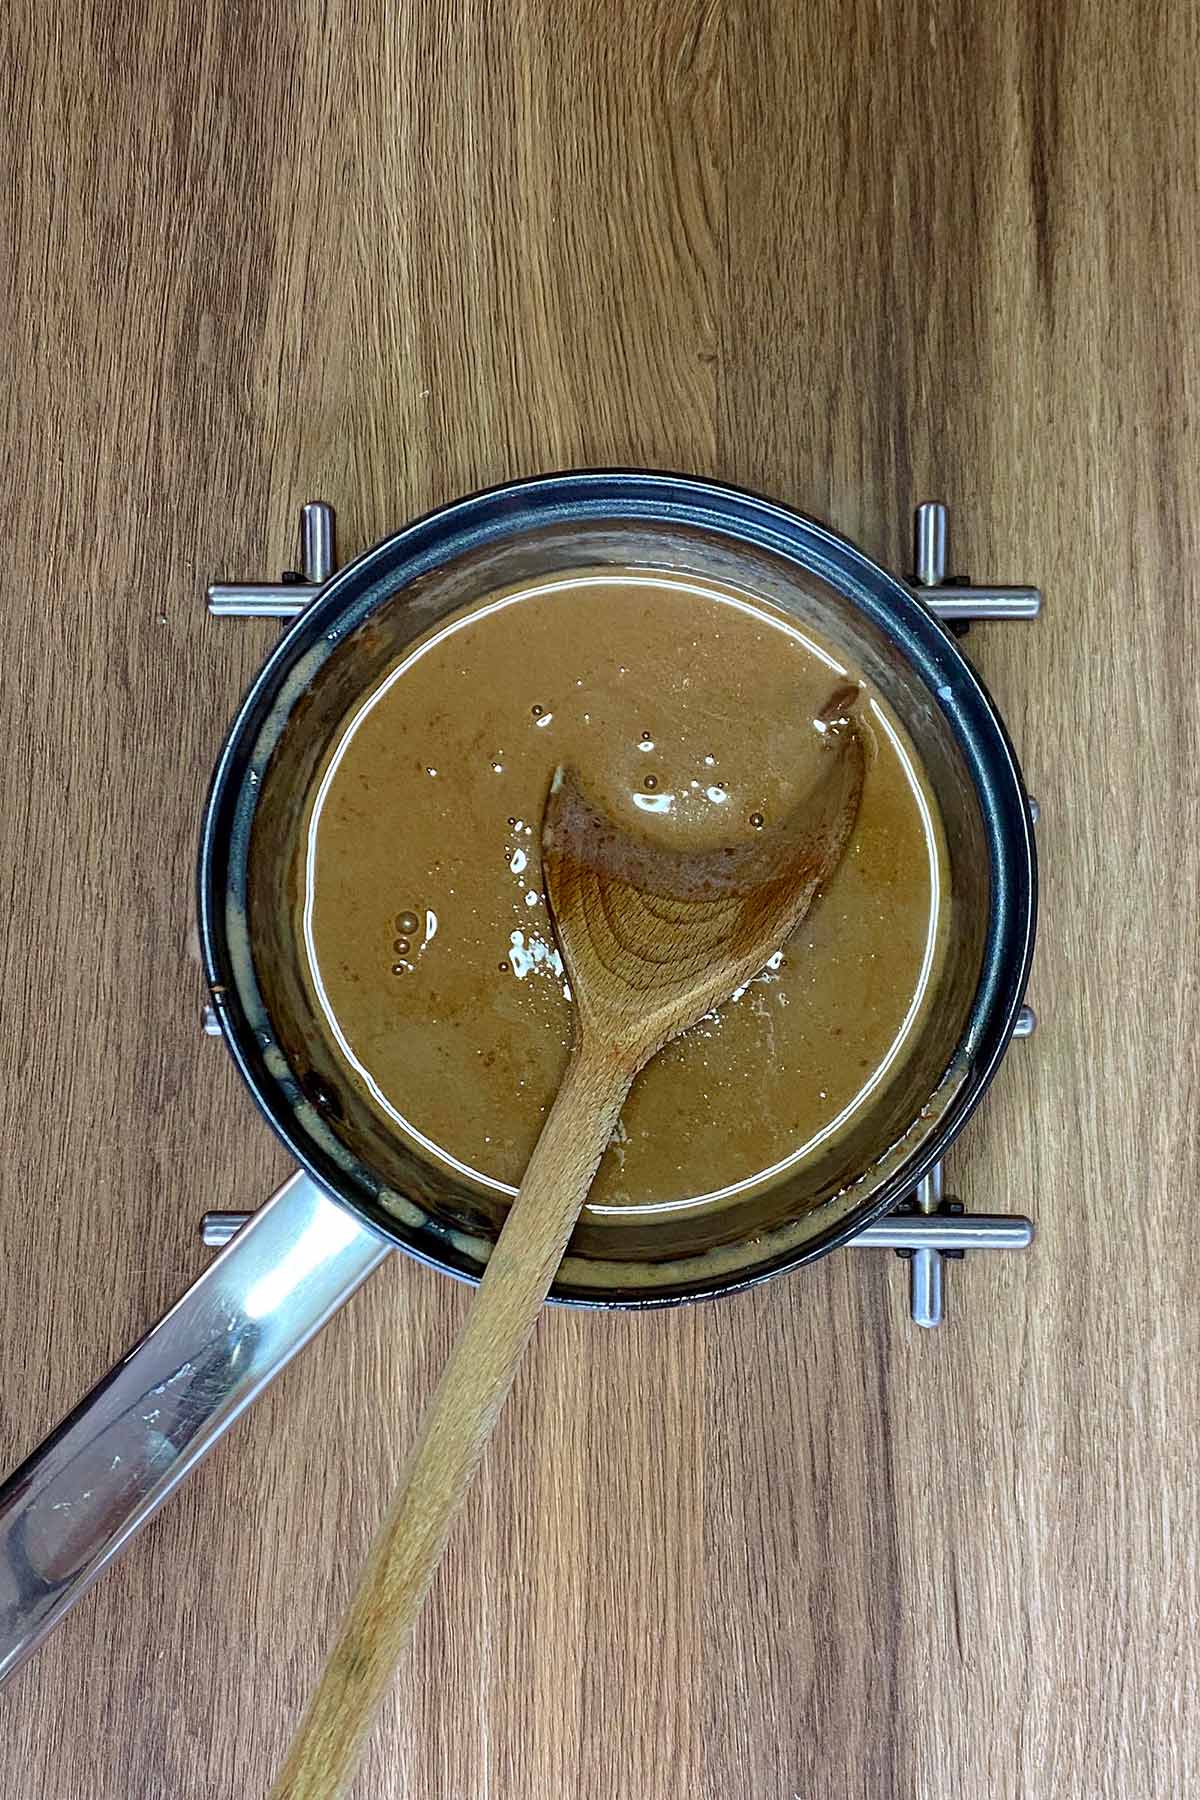 Chocolate sauce in the saucepan.